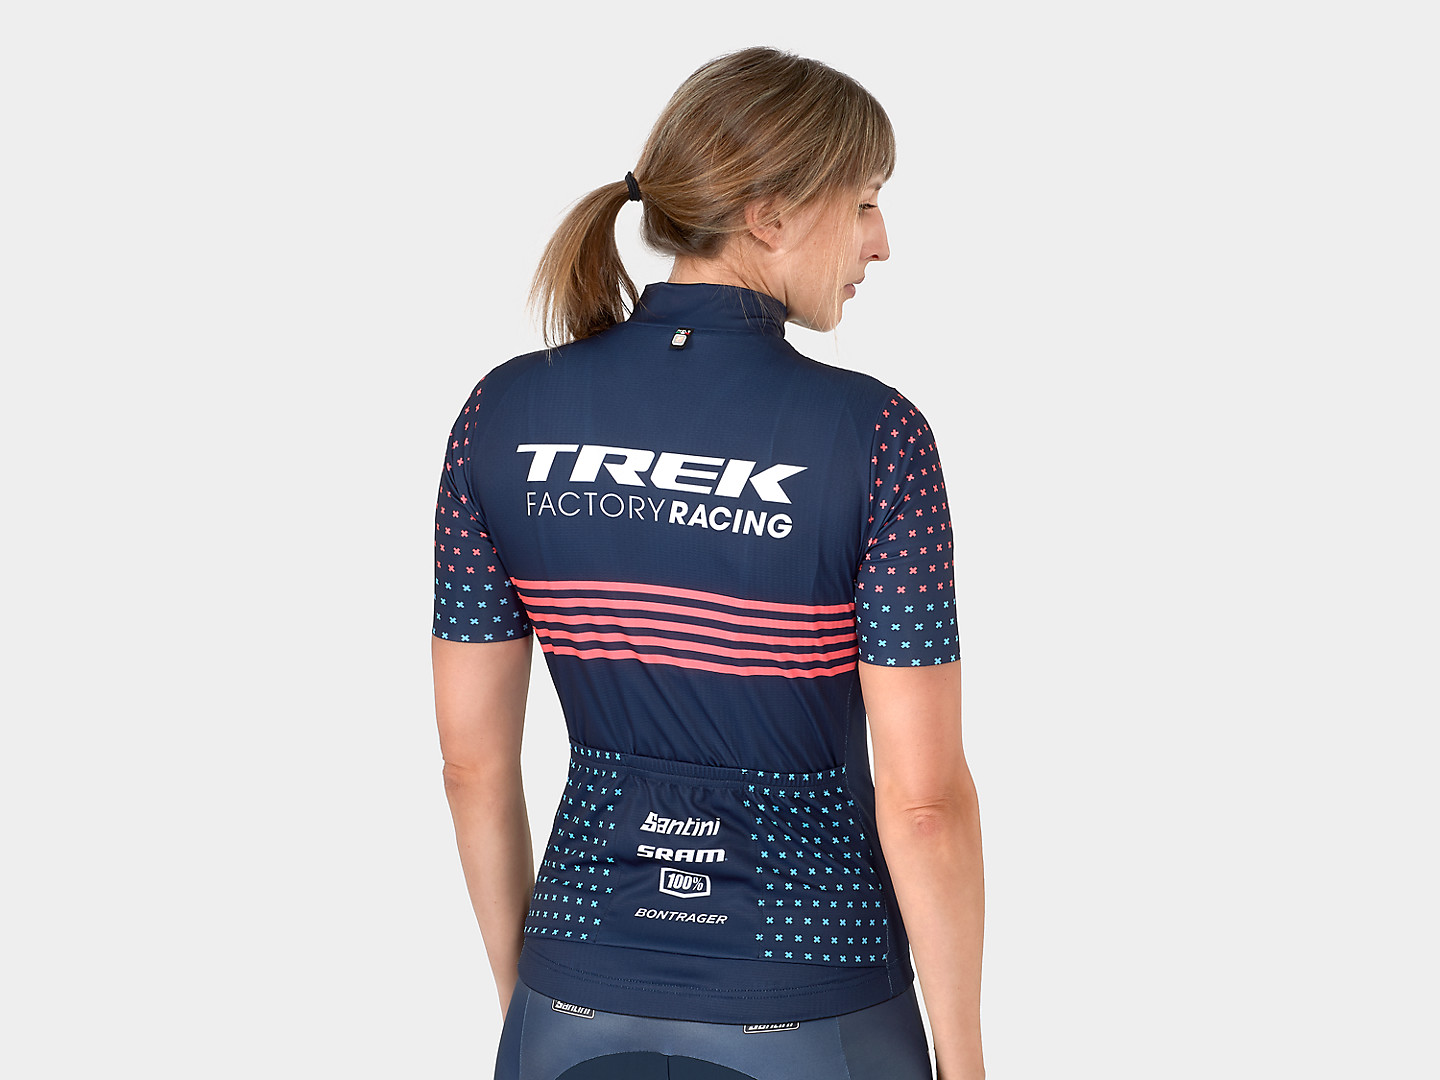 Santini Trek Factory Racing Women's CX Team Replica Cycling Jersey